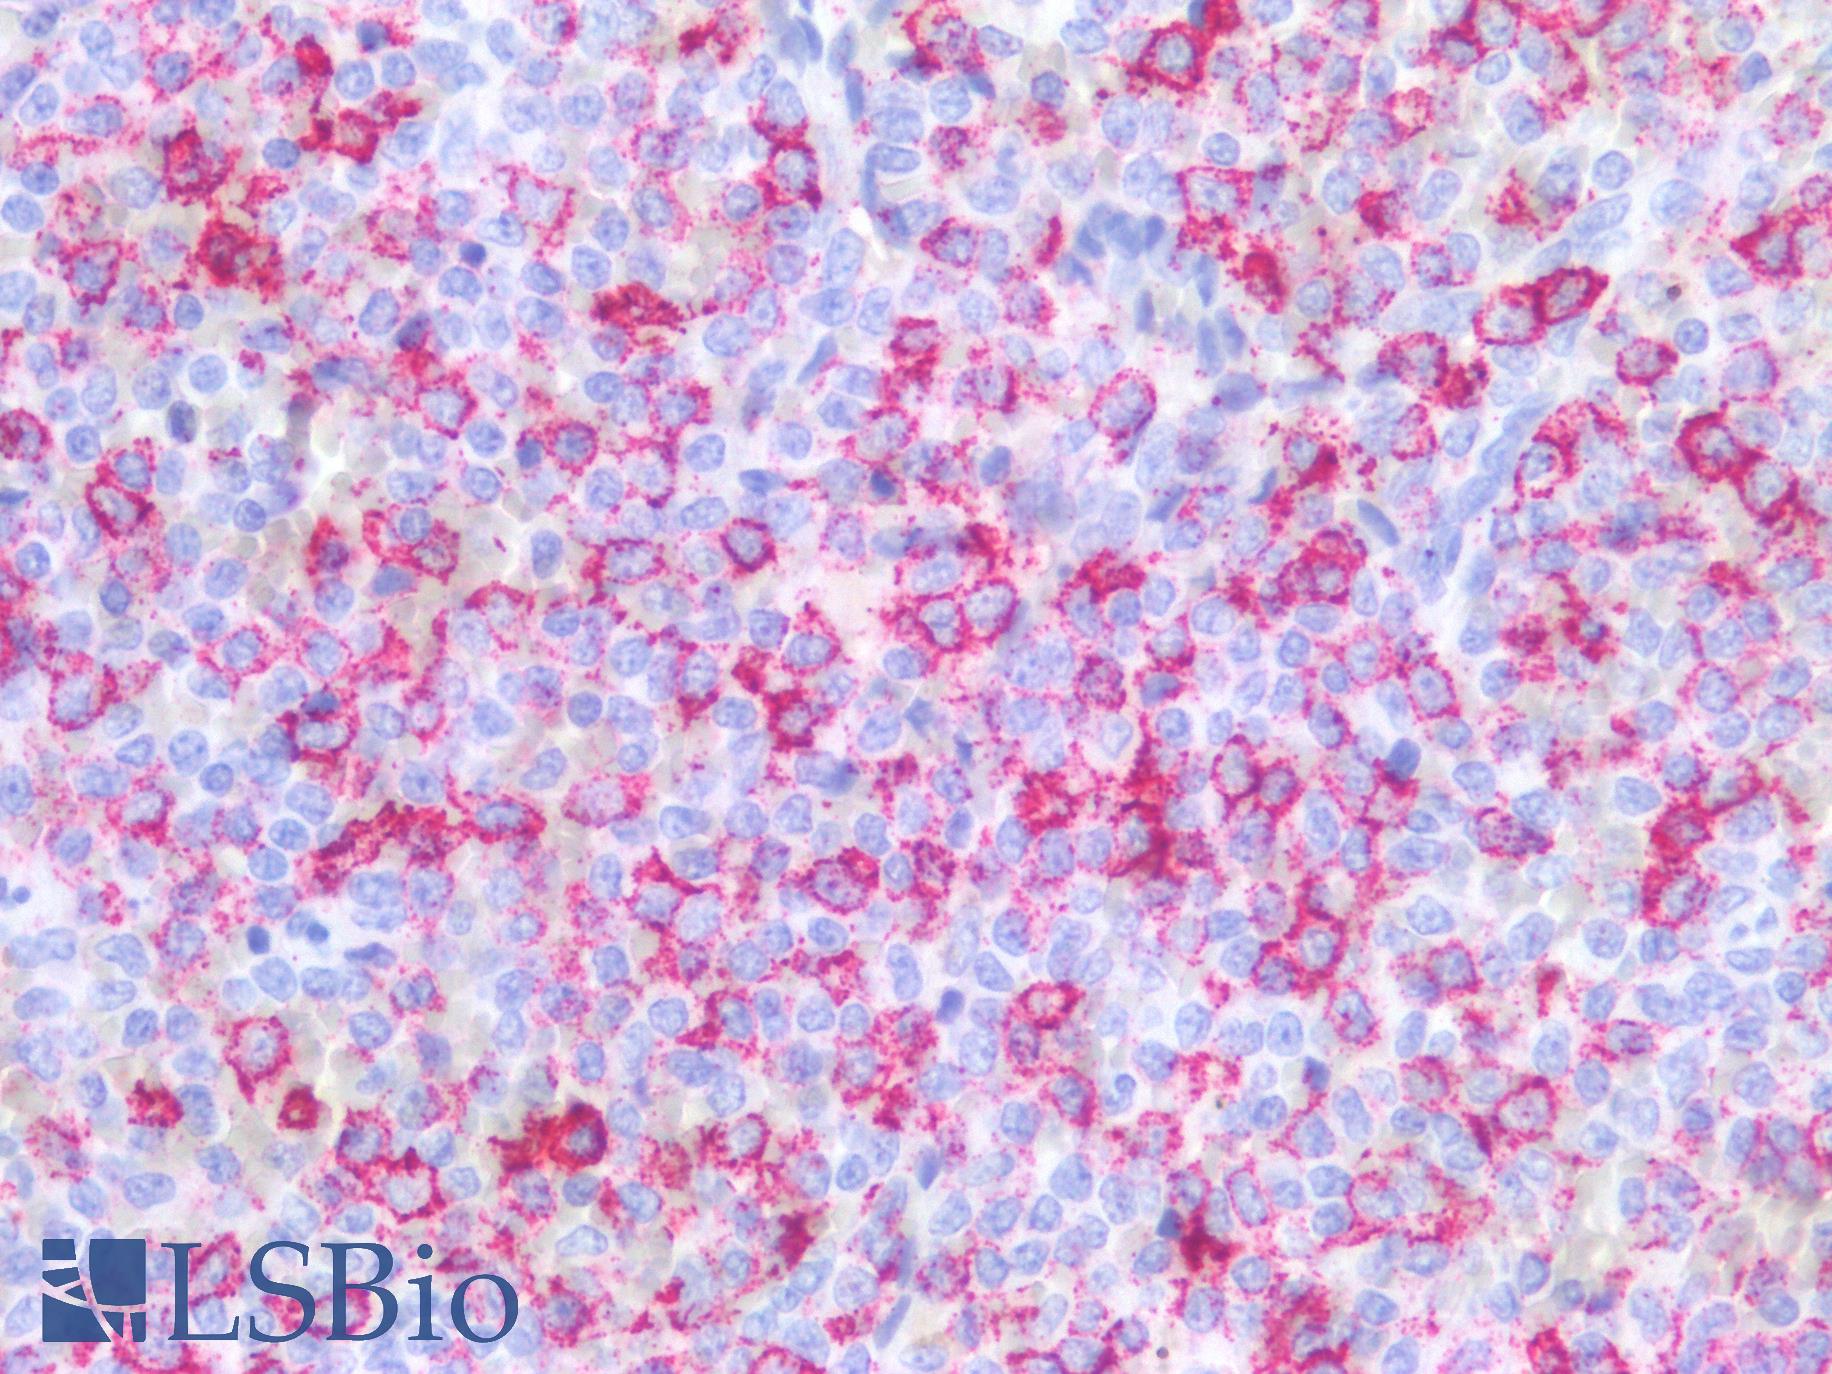 Hairy Cell Leukemia Antibody - Human Spleen: Formalin-Fixed, Paraffin-Embedded (FFPE)